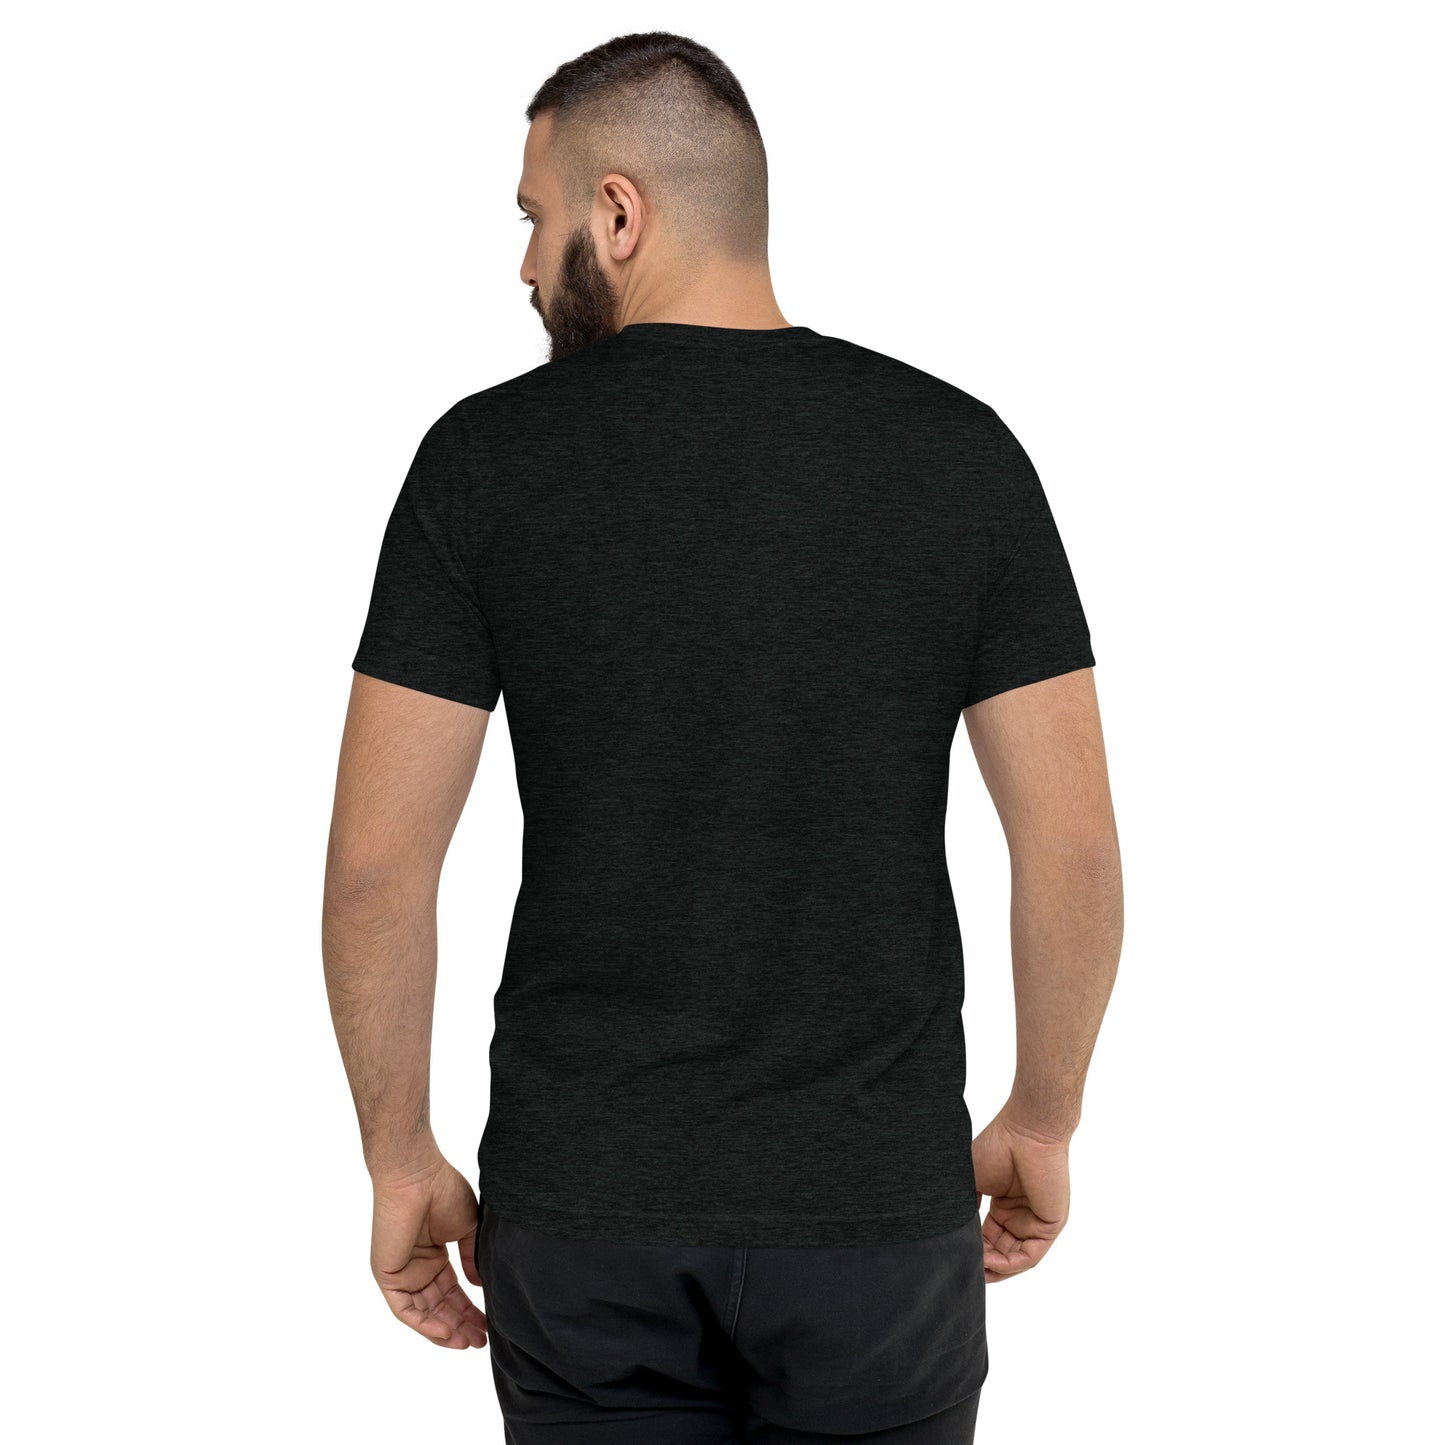 602 AZ Faithful Short Sleeve Tri-Blend T-Shirt